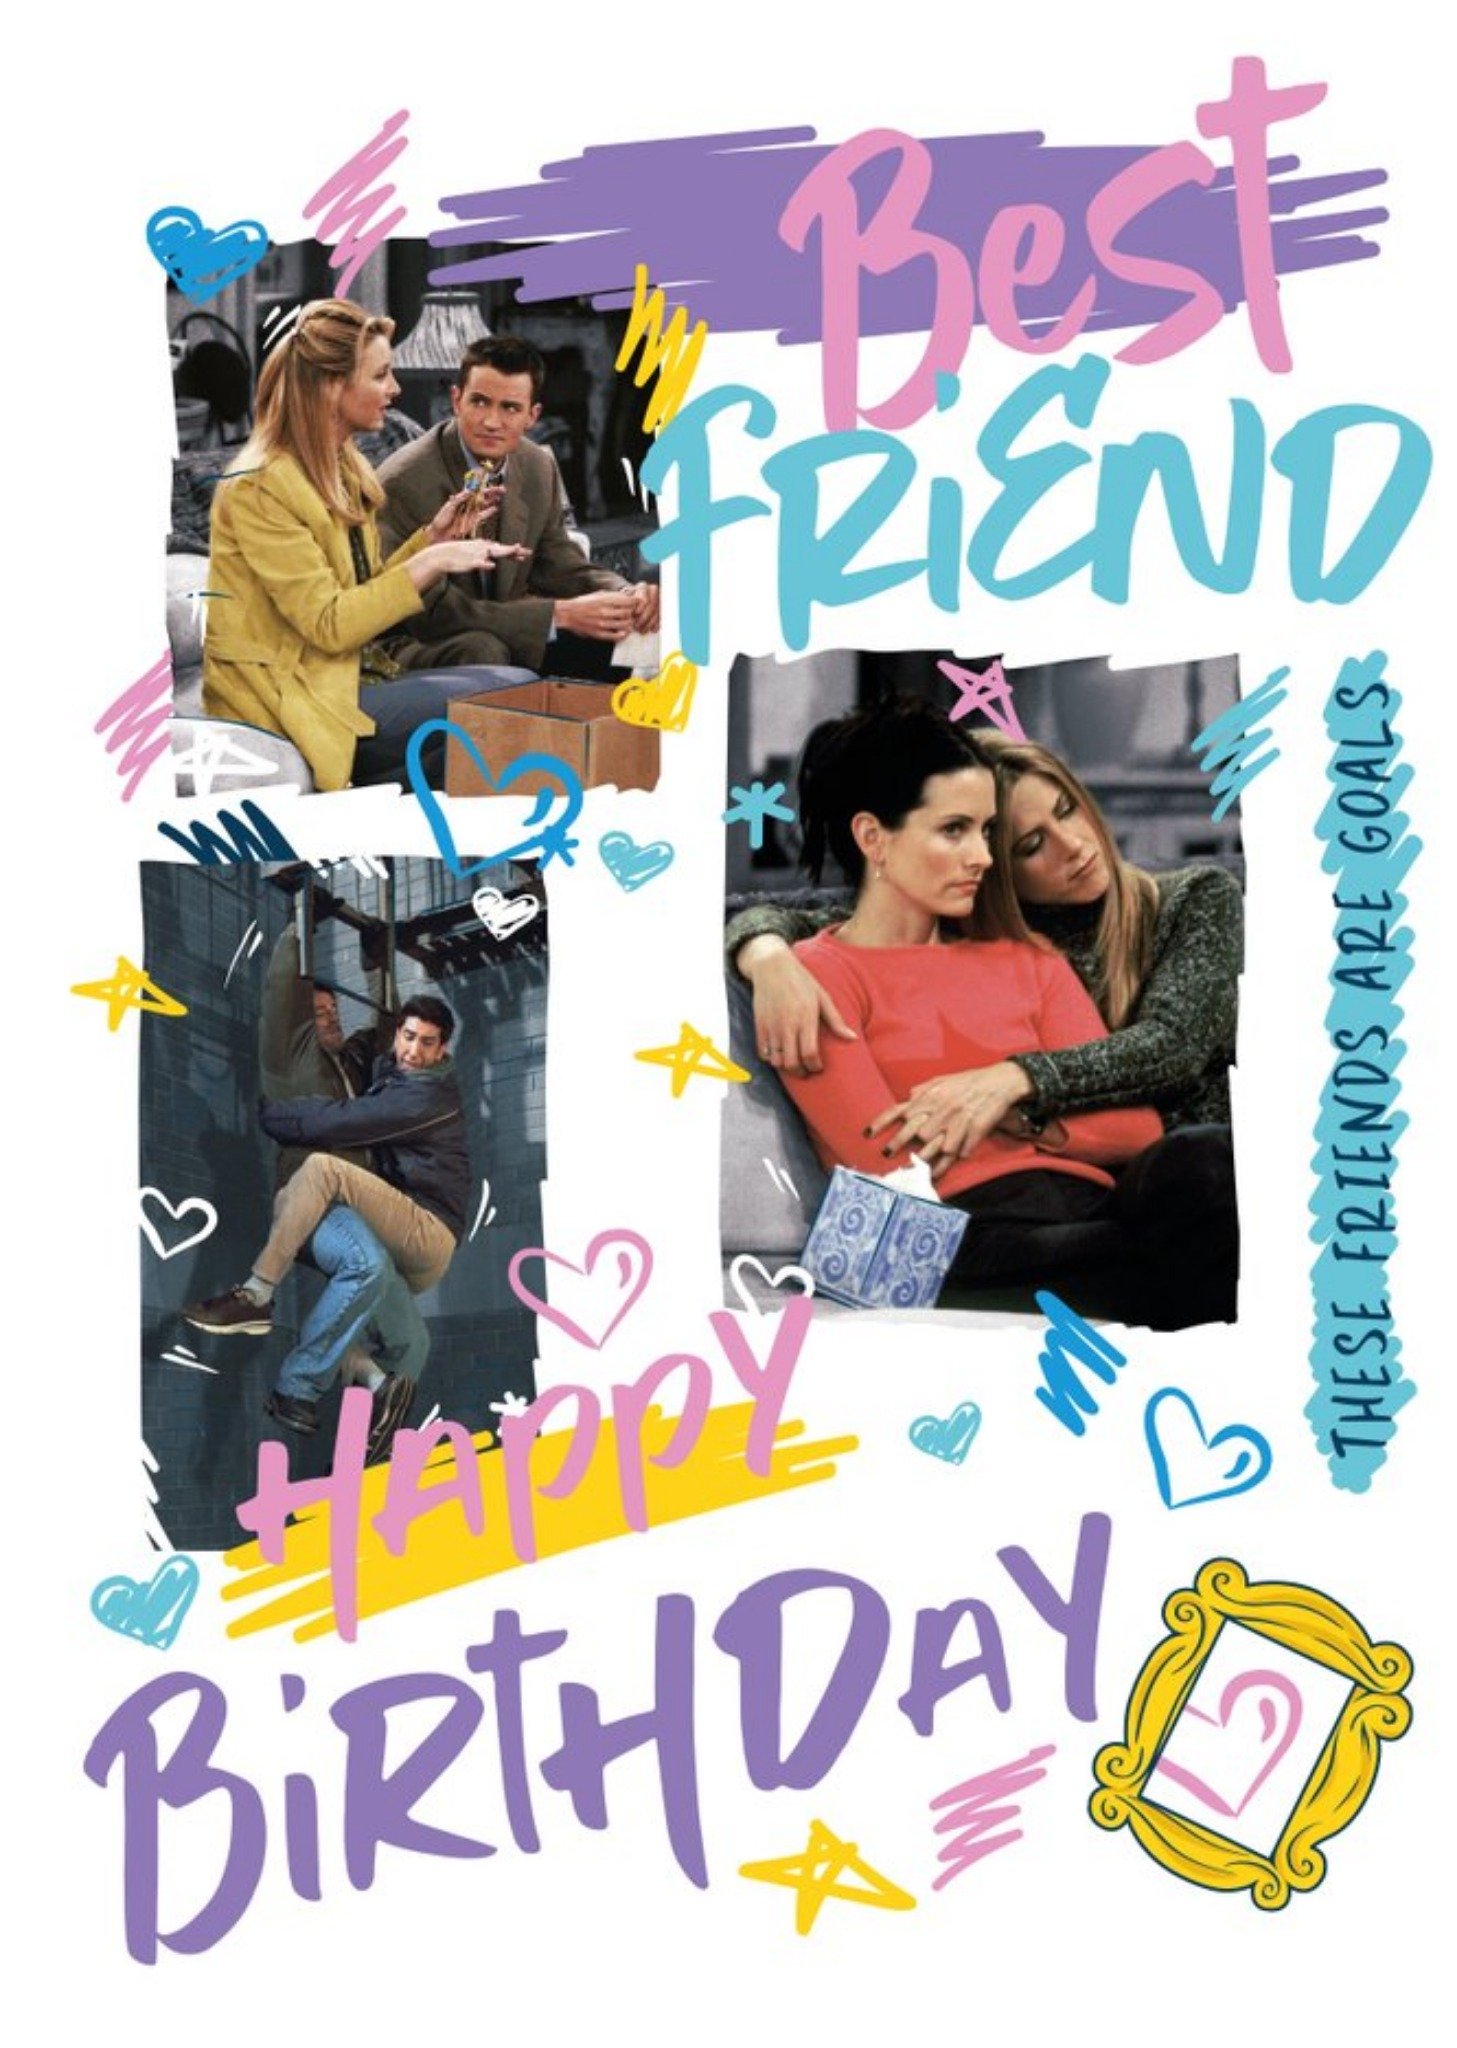 Friends (Tv Show) Friends Tv Best Friend Happy Birthday Card, Large